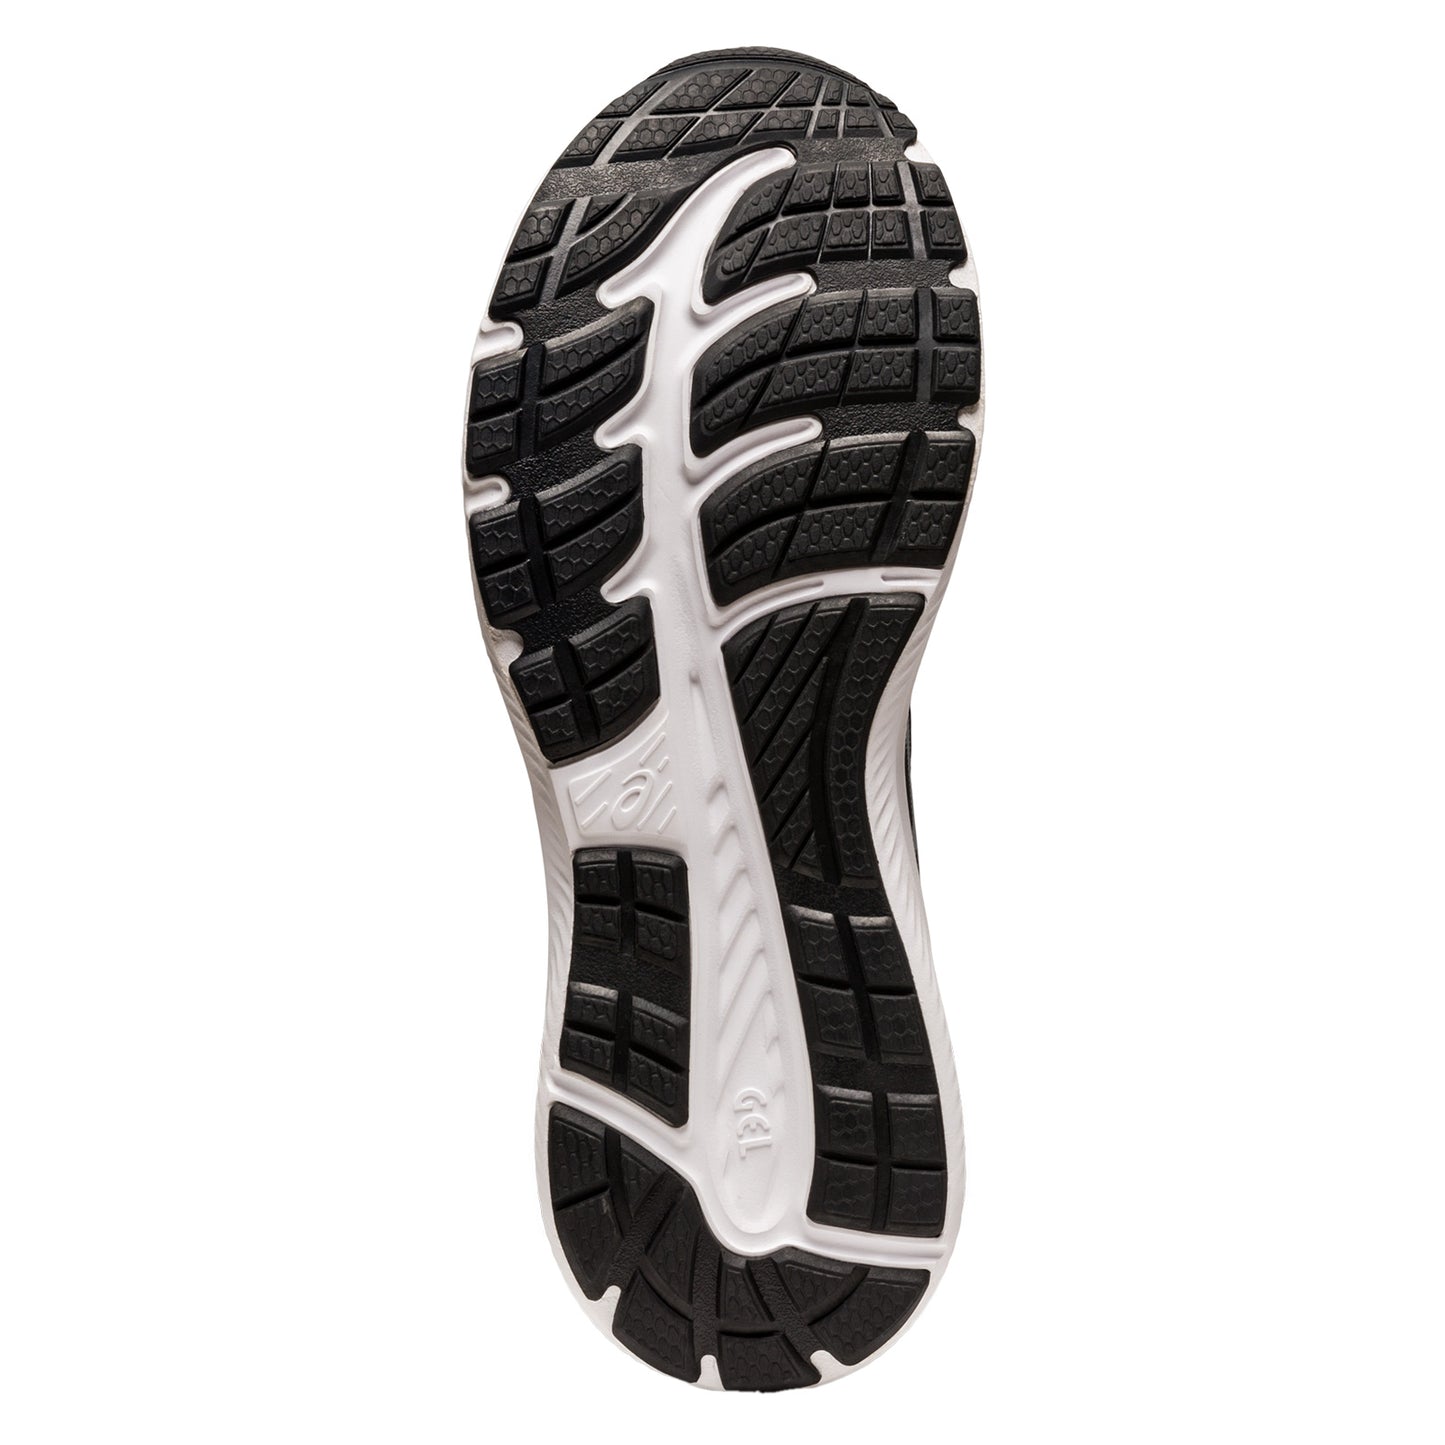 Peltz Shoes  Men's ASICS GEL-Contend 8 Running Shoe Black White 1011B492.002